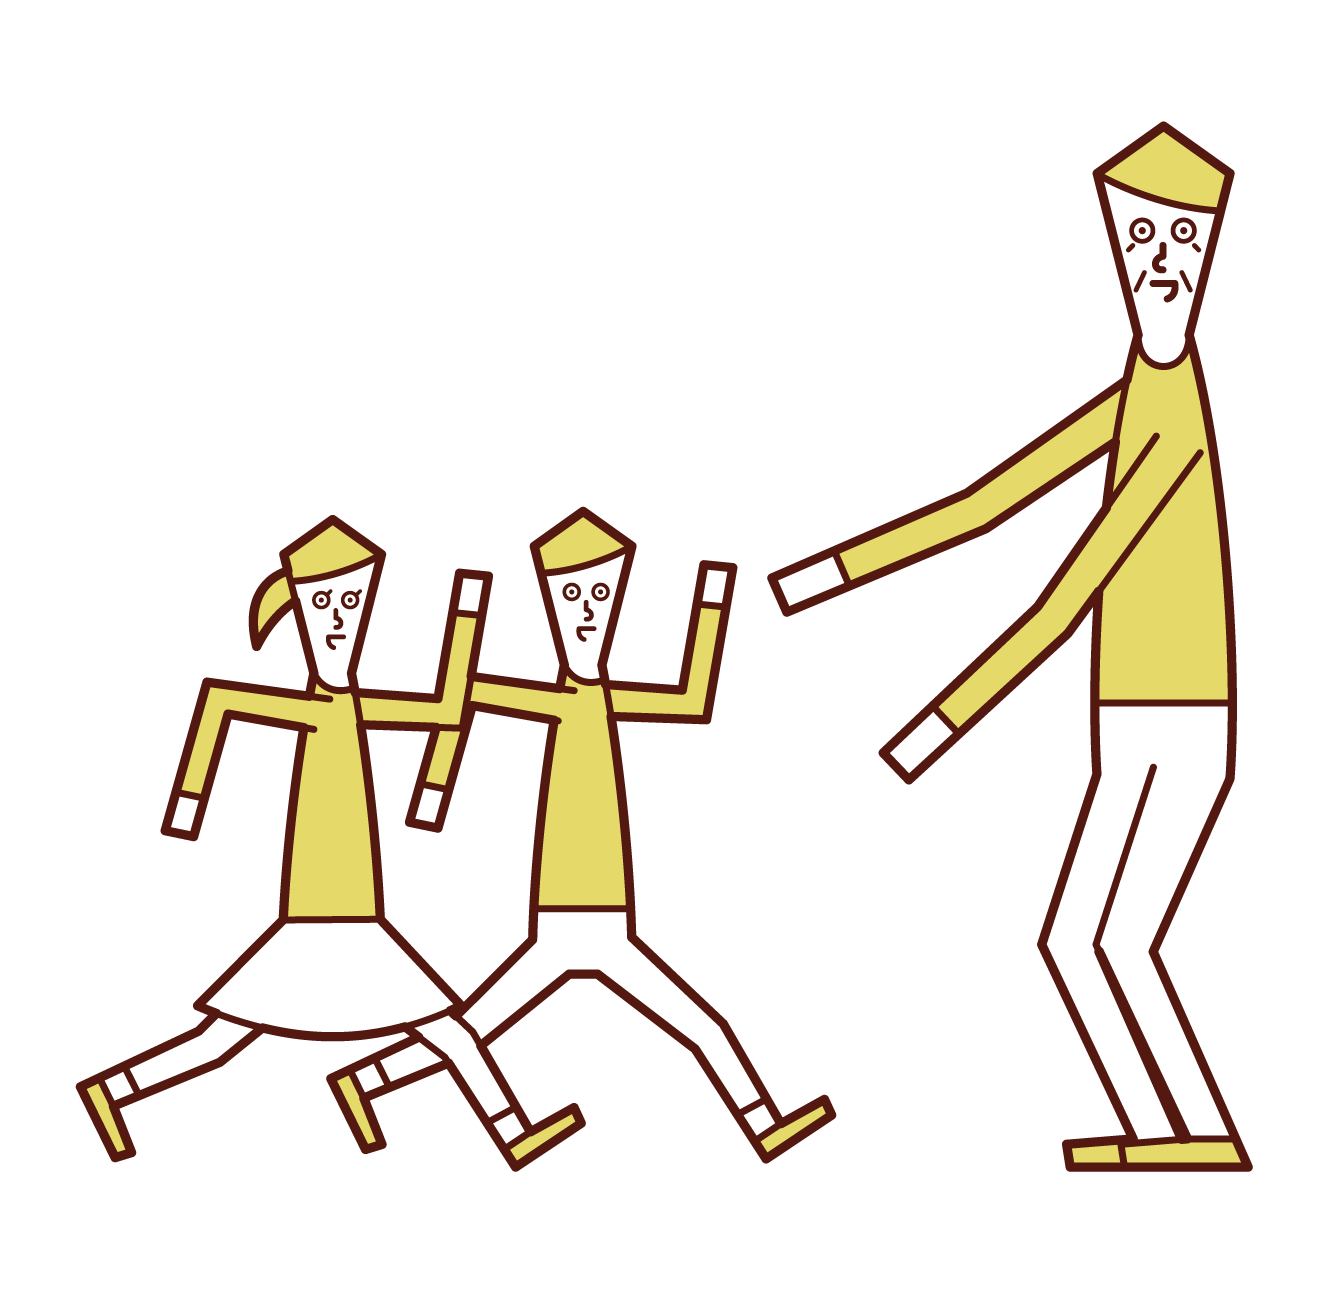 Illustration of an old man (man) greeting children